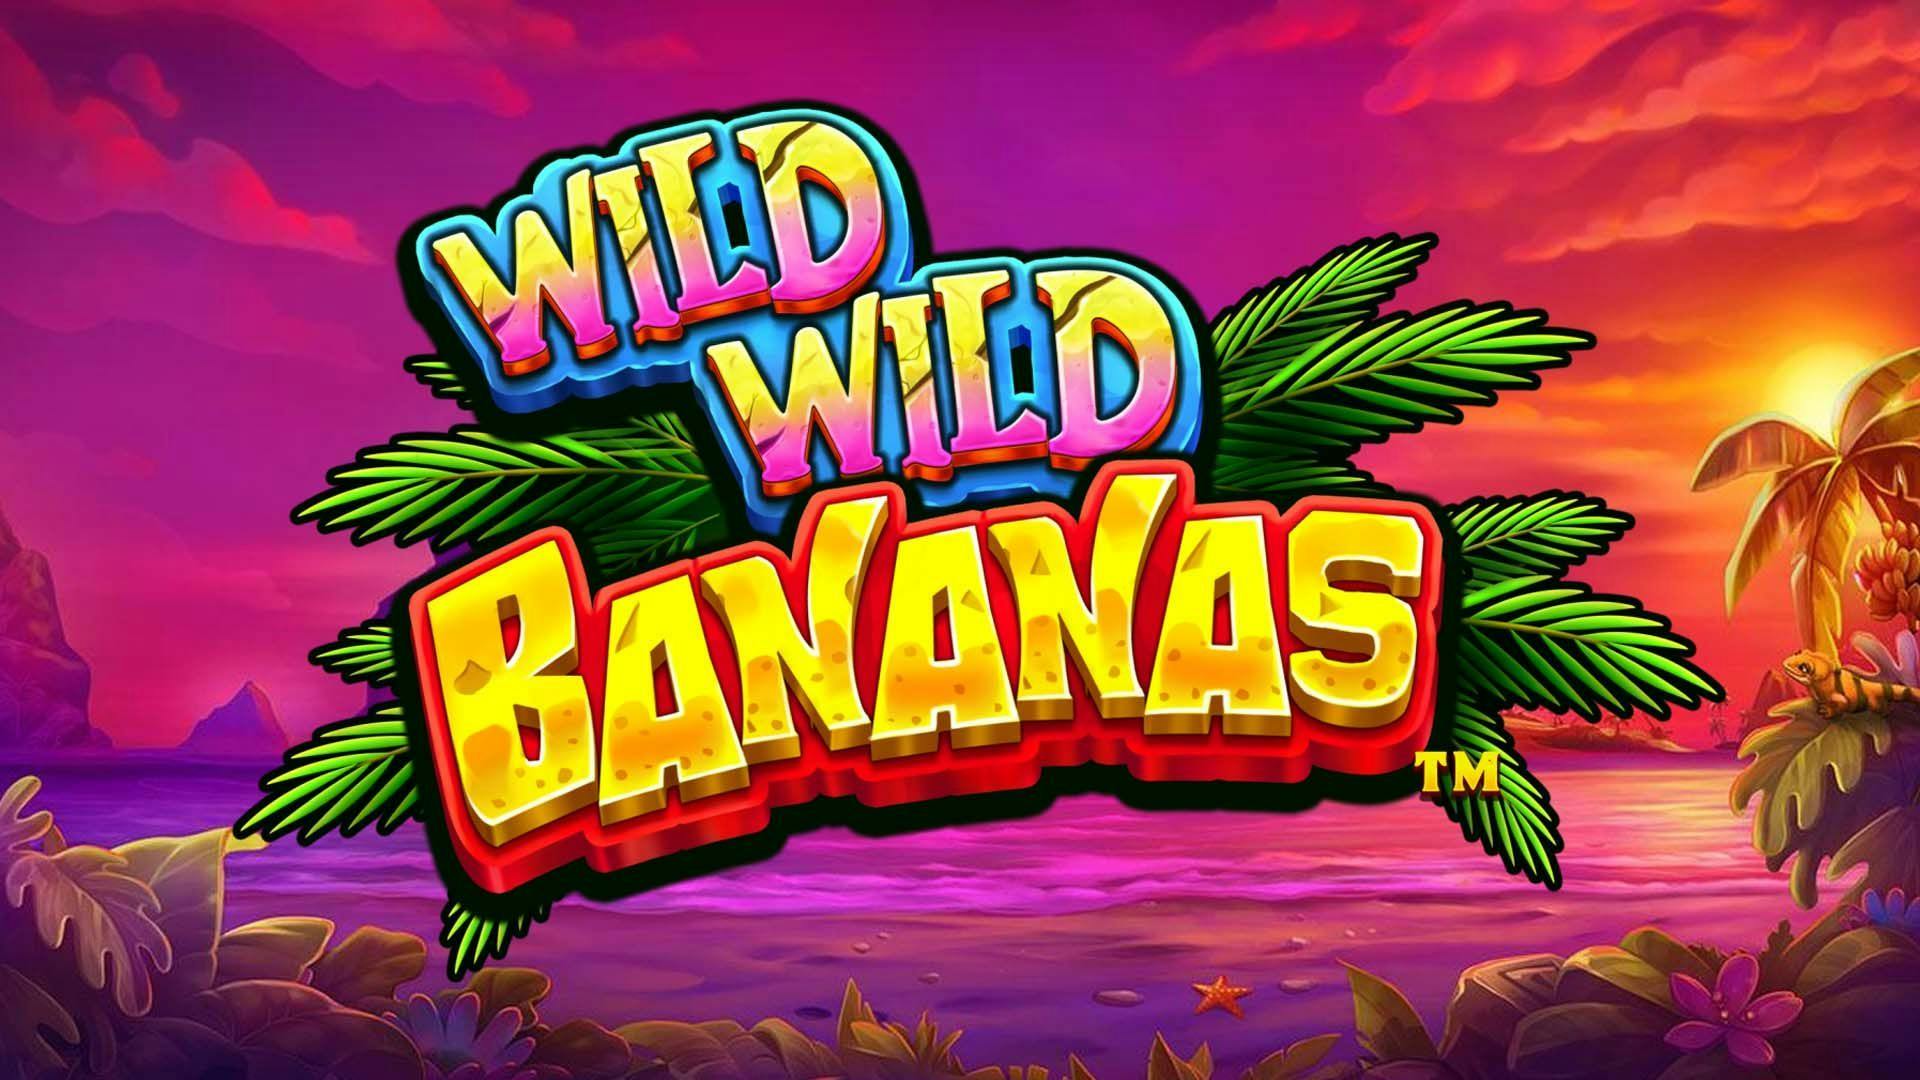 Wild Wild Bananas Slot Machine Online Free Game Play